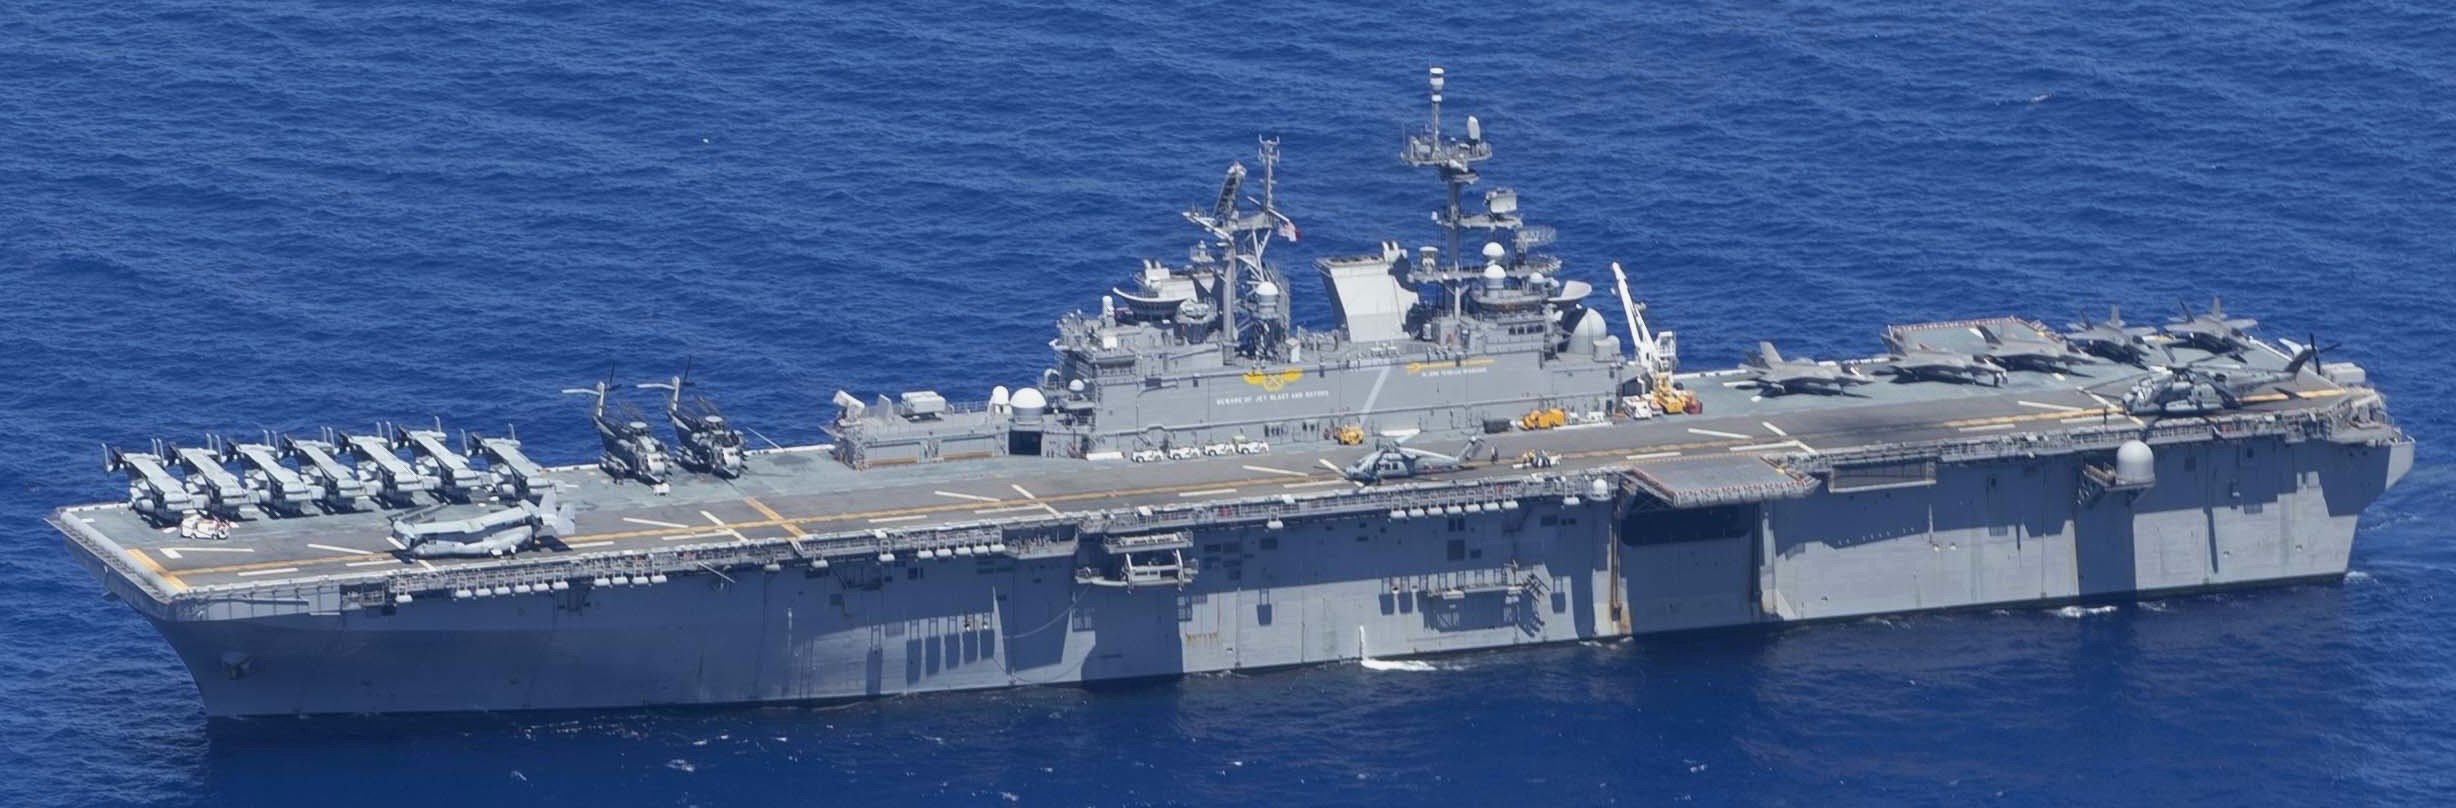 lha-7 uss tripoli america class amphibious assault ship landing us navy marines vmm-262 63